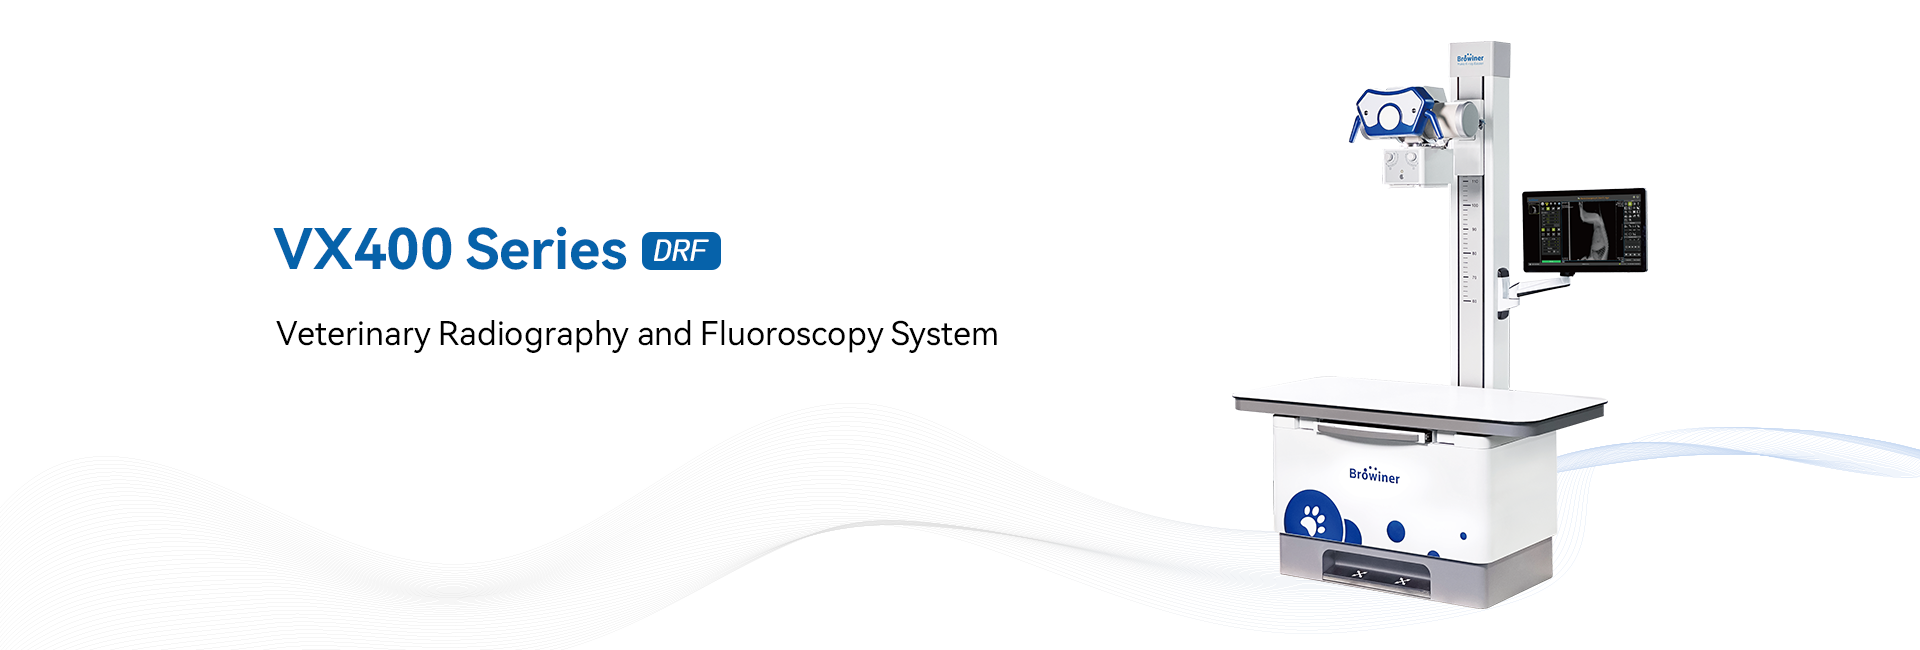 Veterinary Radiography and Fluoroscopy System